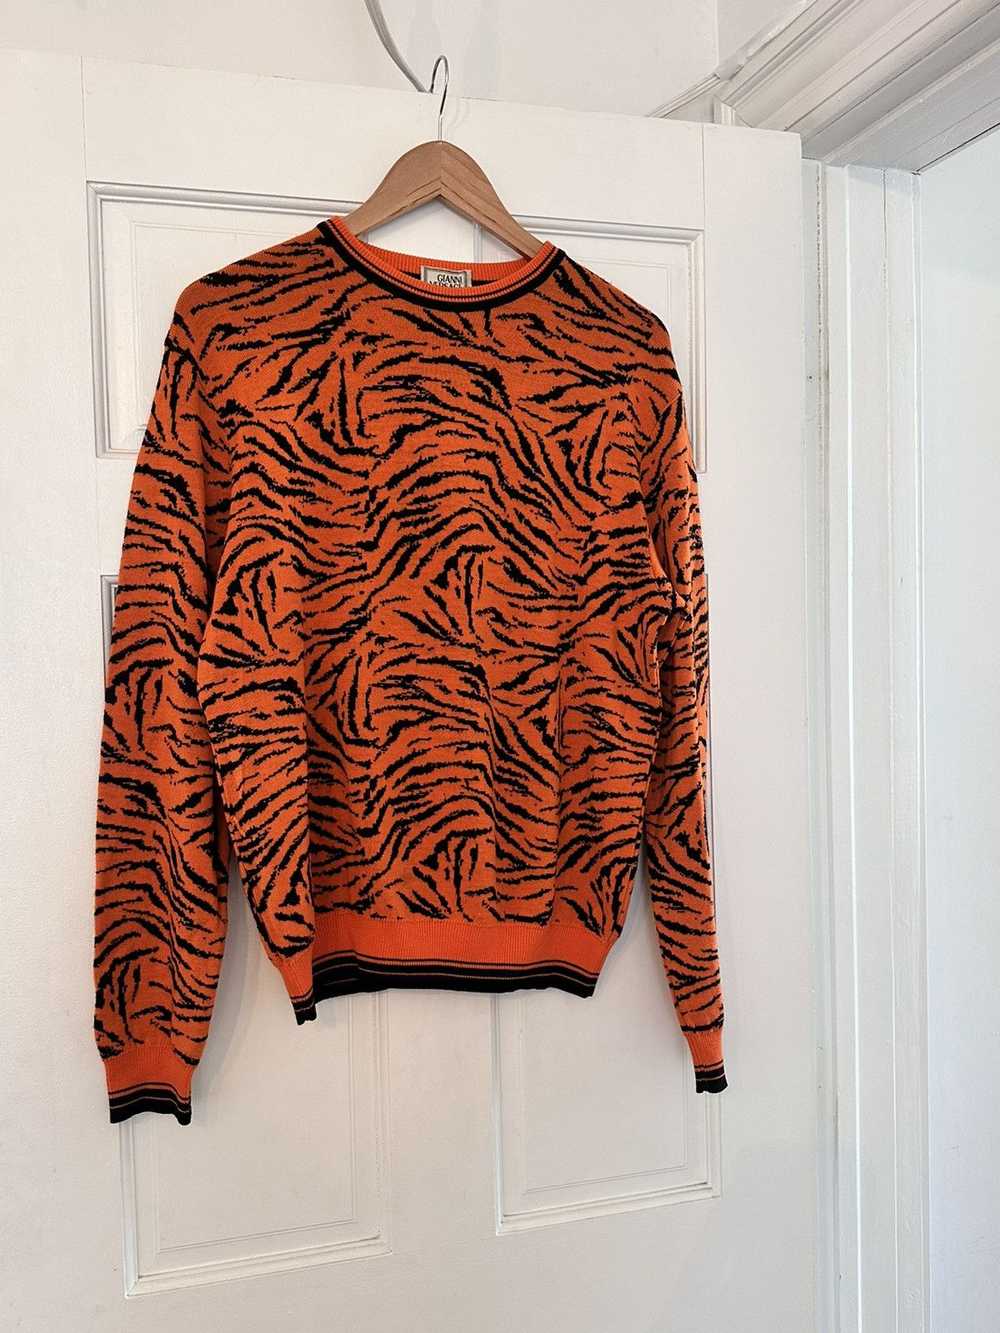 Versace Versace Tiger Print Sweater - image 3